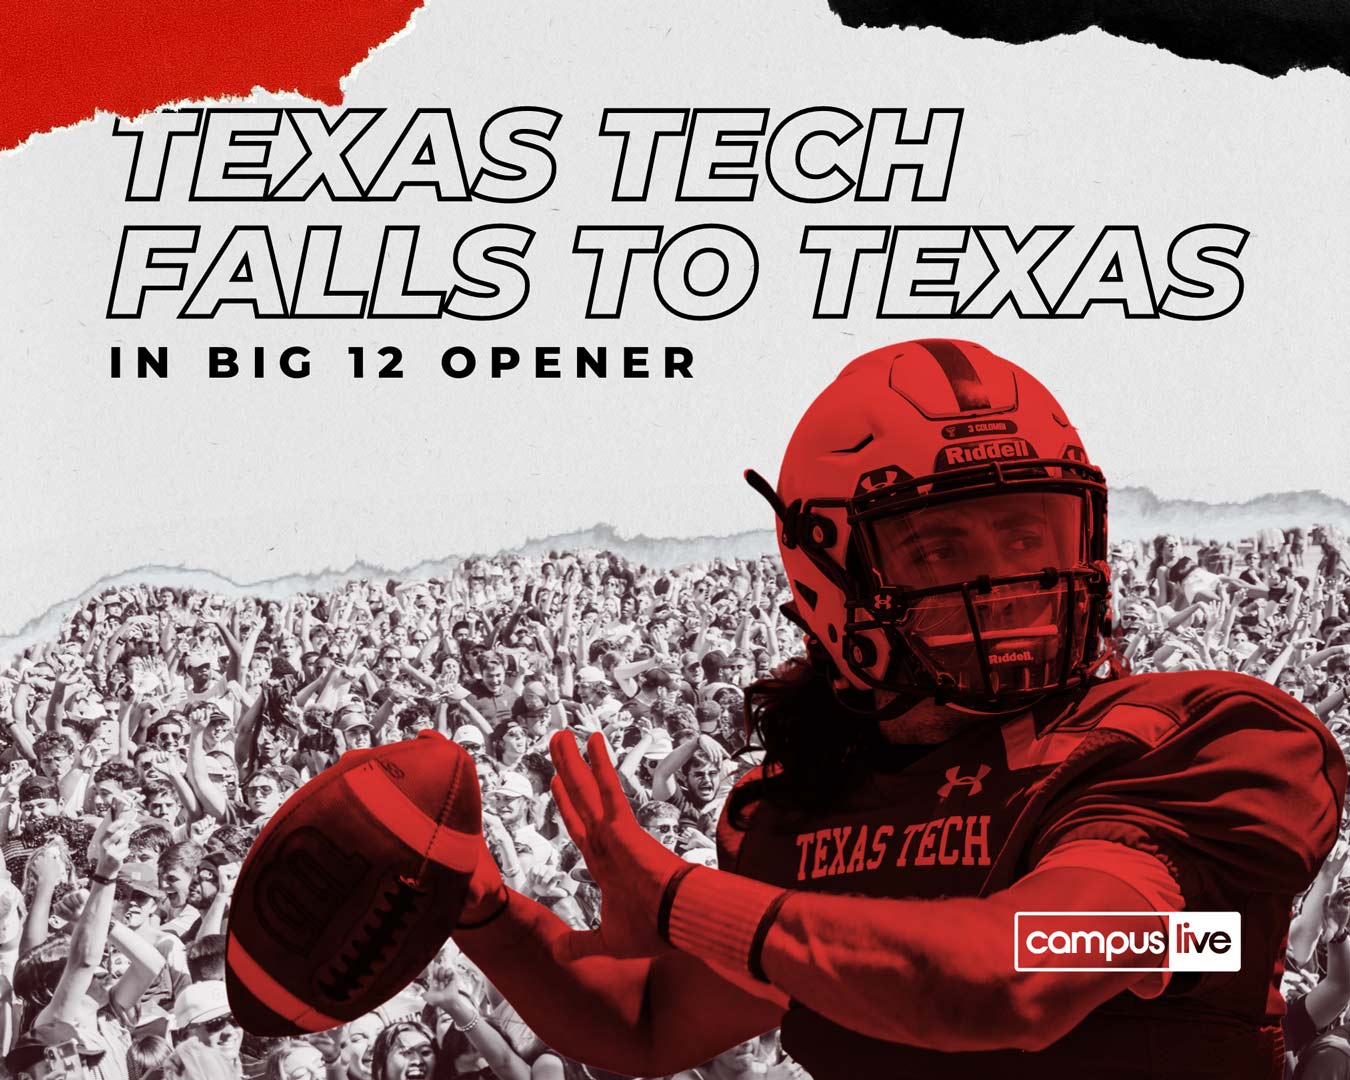 Texas Tech vs UT Week Four Big 12 Opener Campus Live